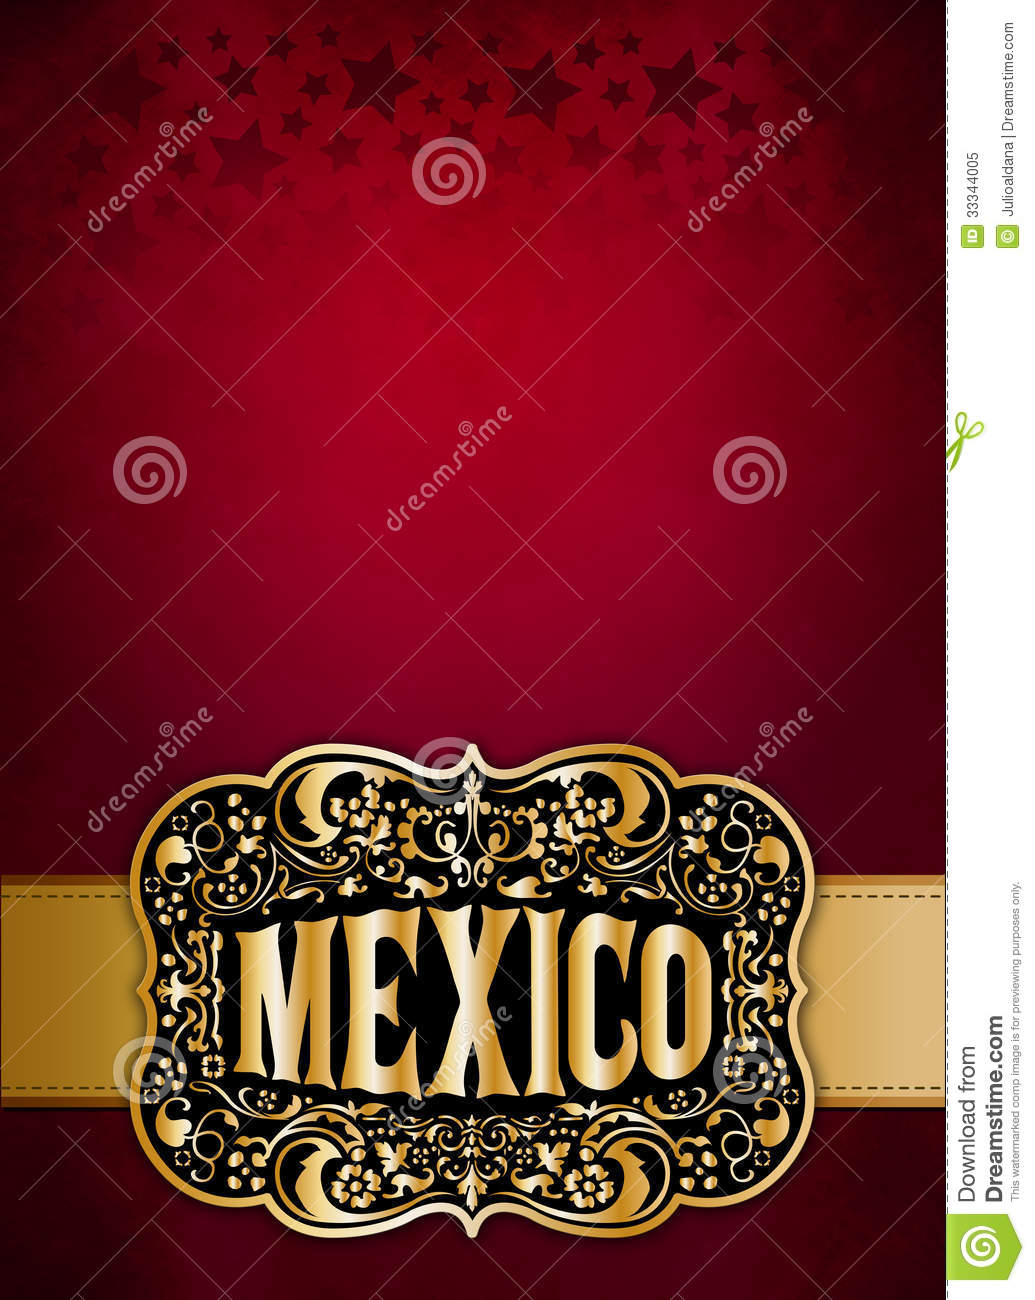 Mexican Cowboy Belt Buckle Design   Poster   Card Template   Copyspace